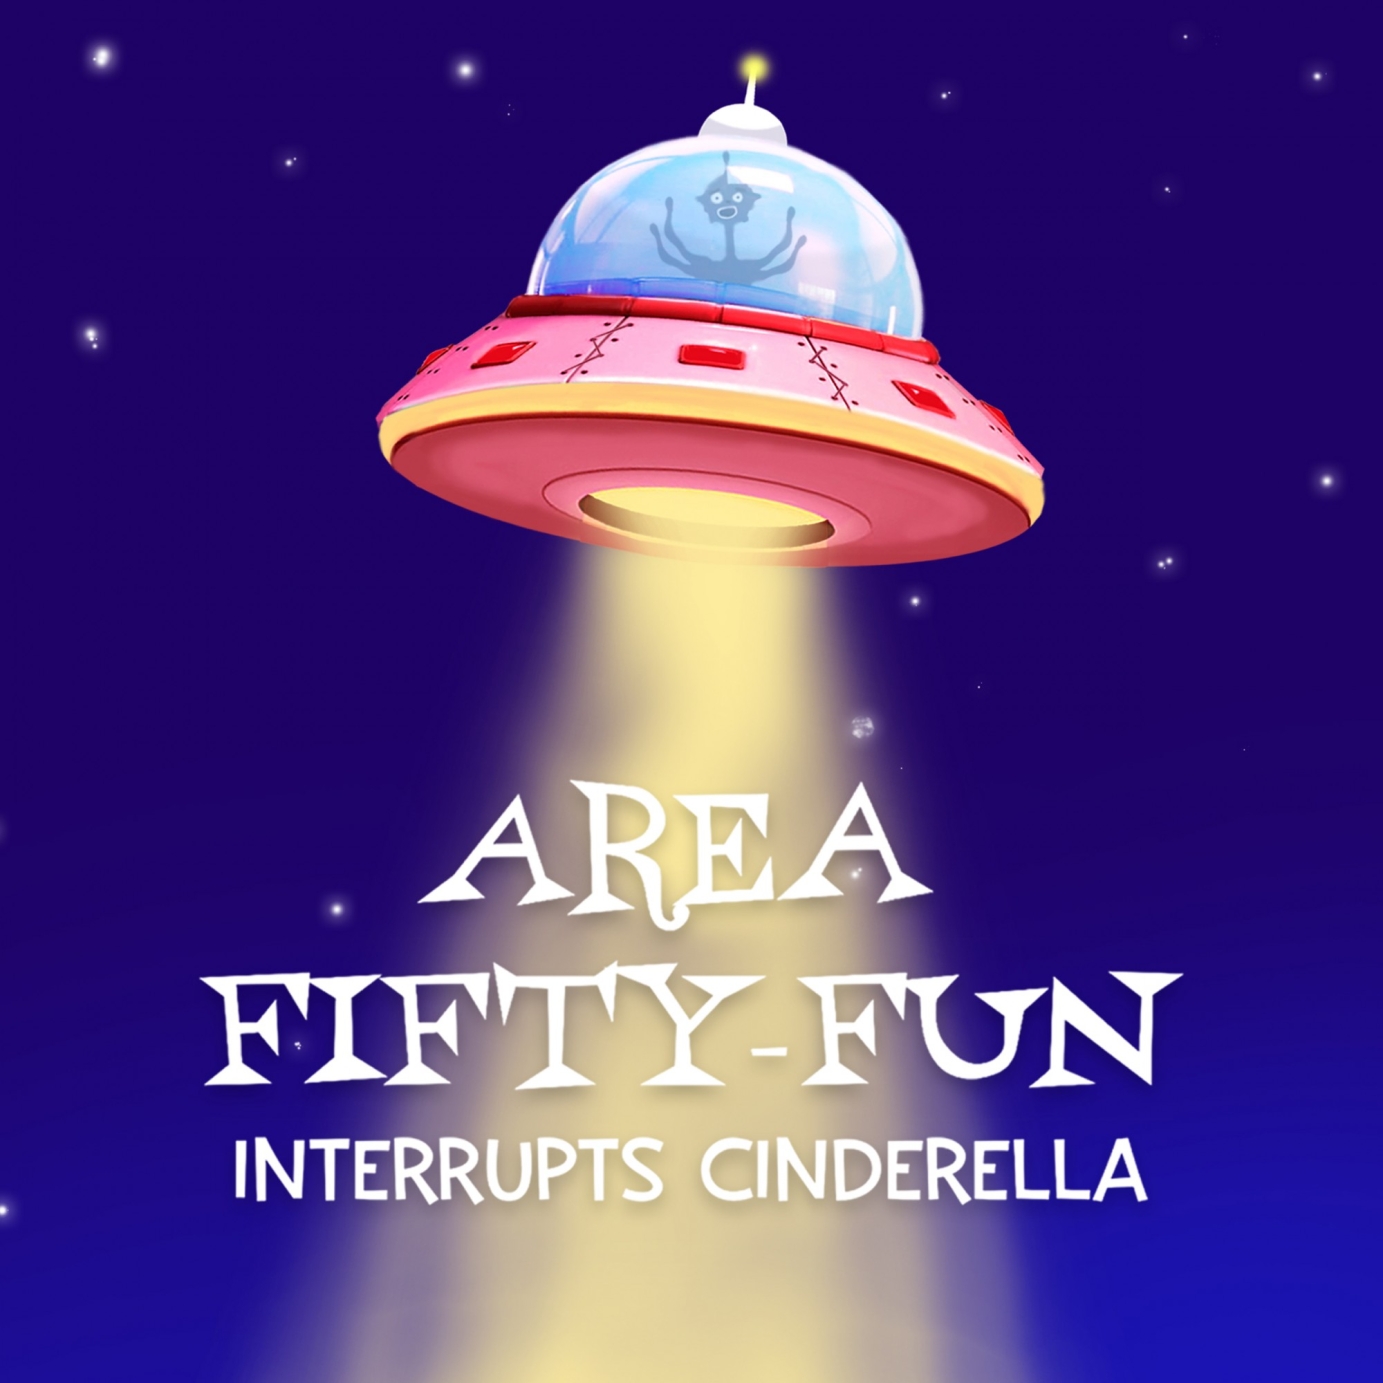 Area Fifty-Fun Interrupts Cinderella